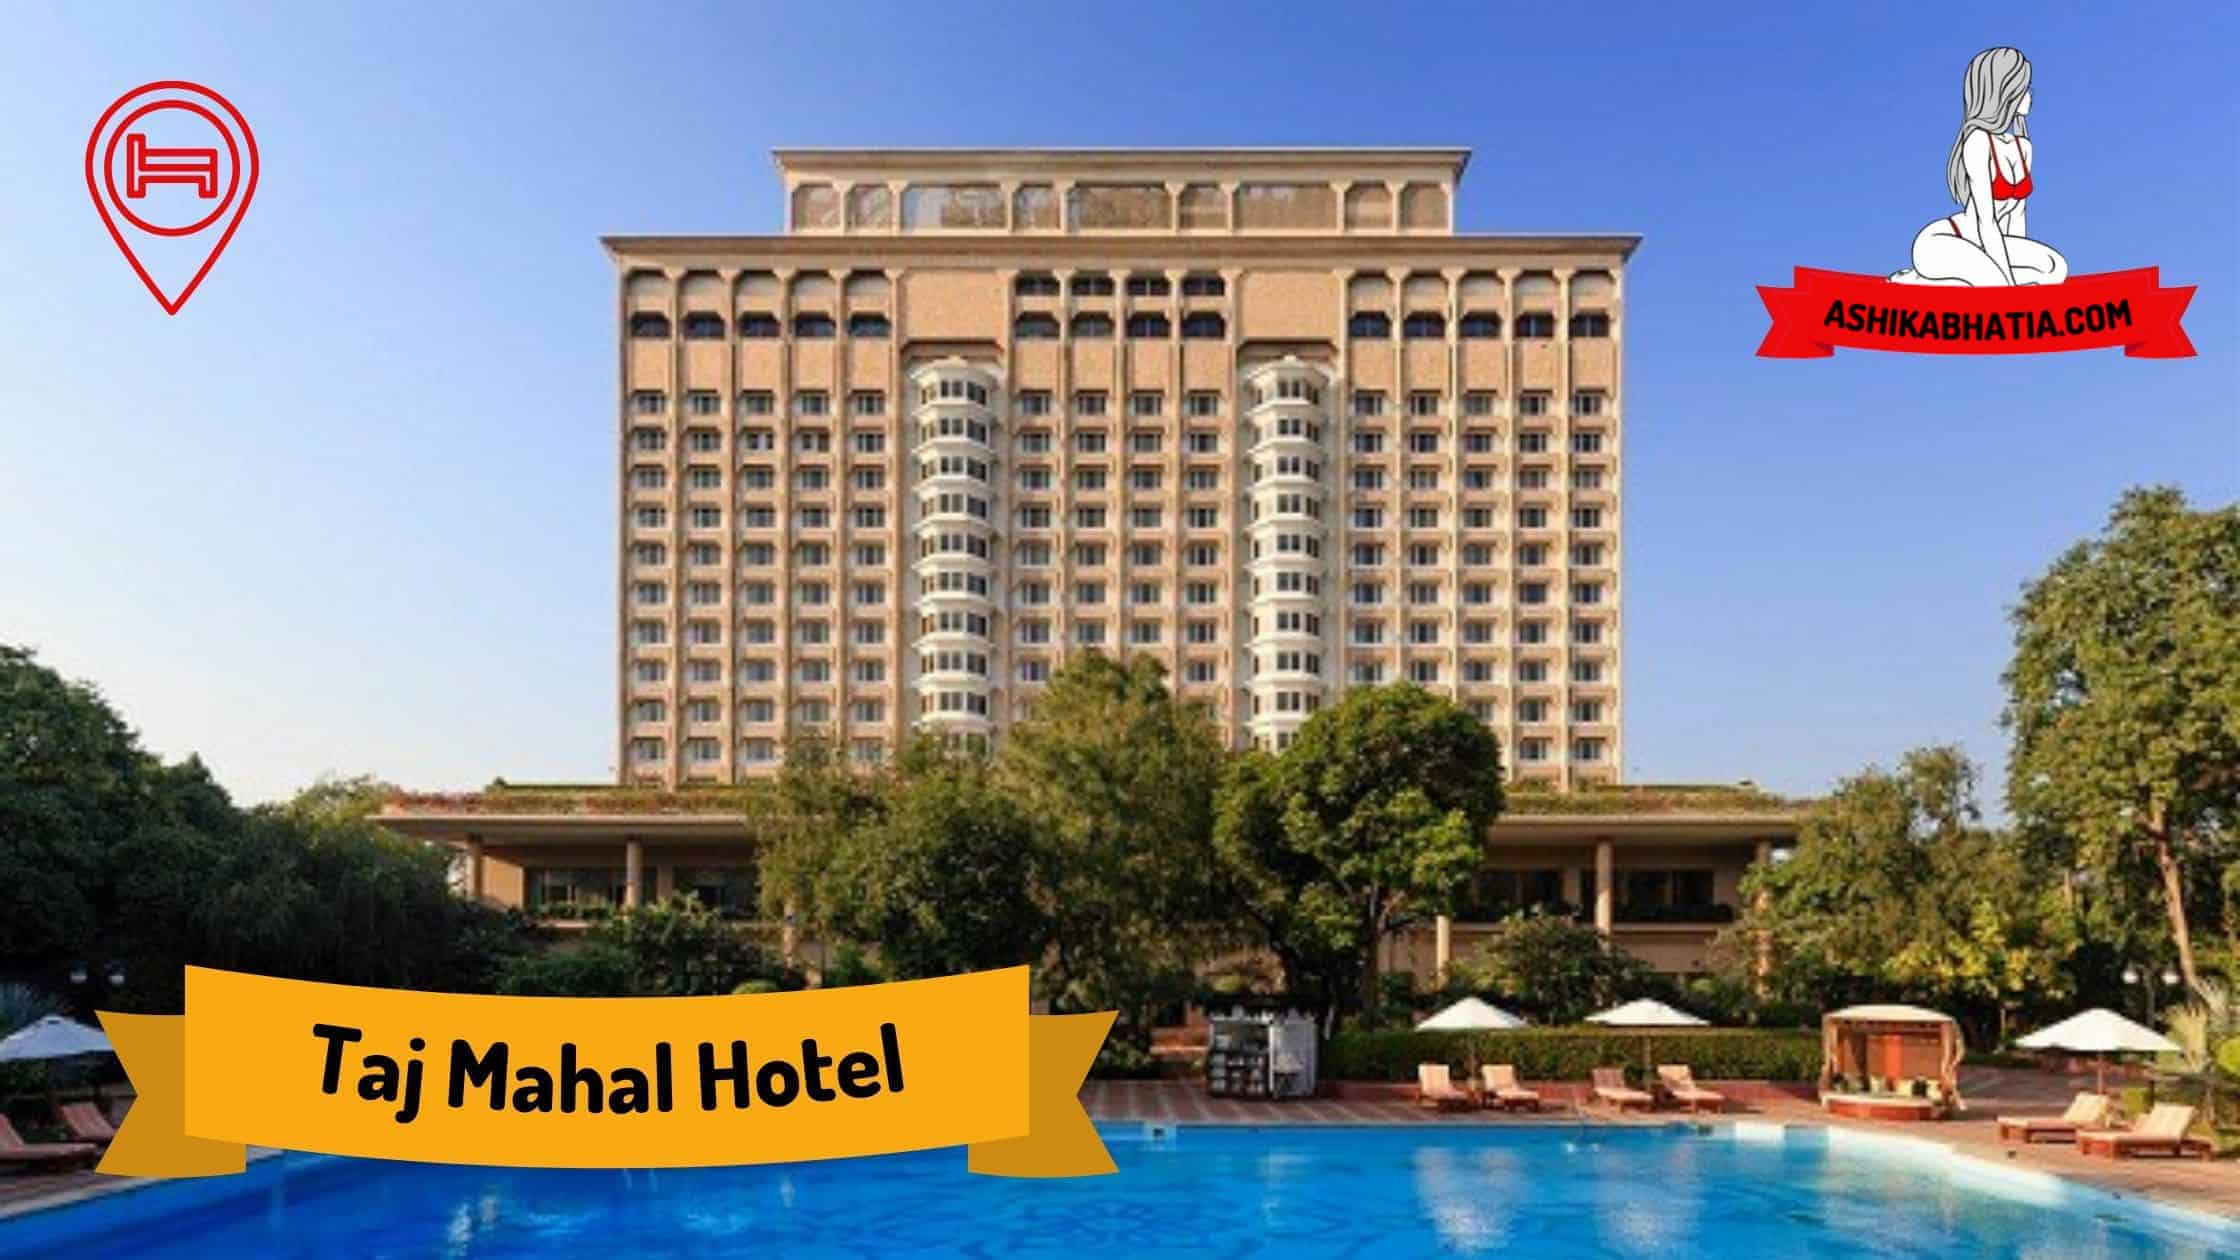 Taj Mahal Hotel Escorts